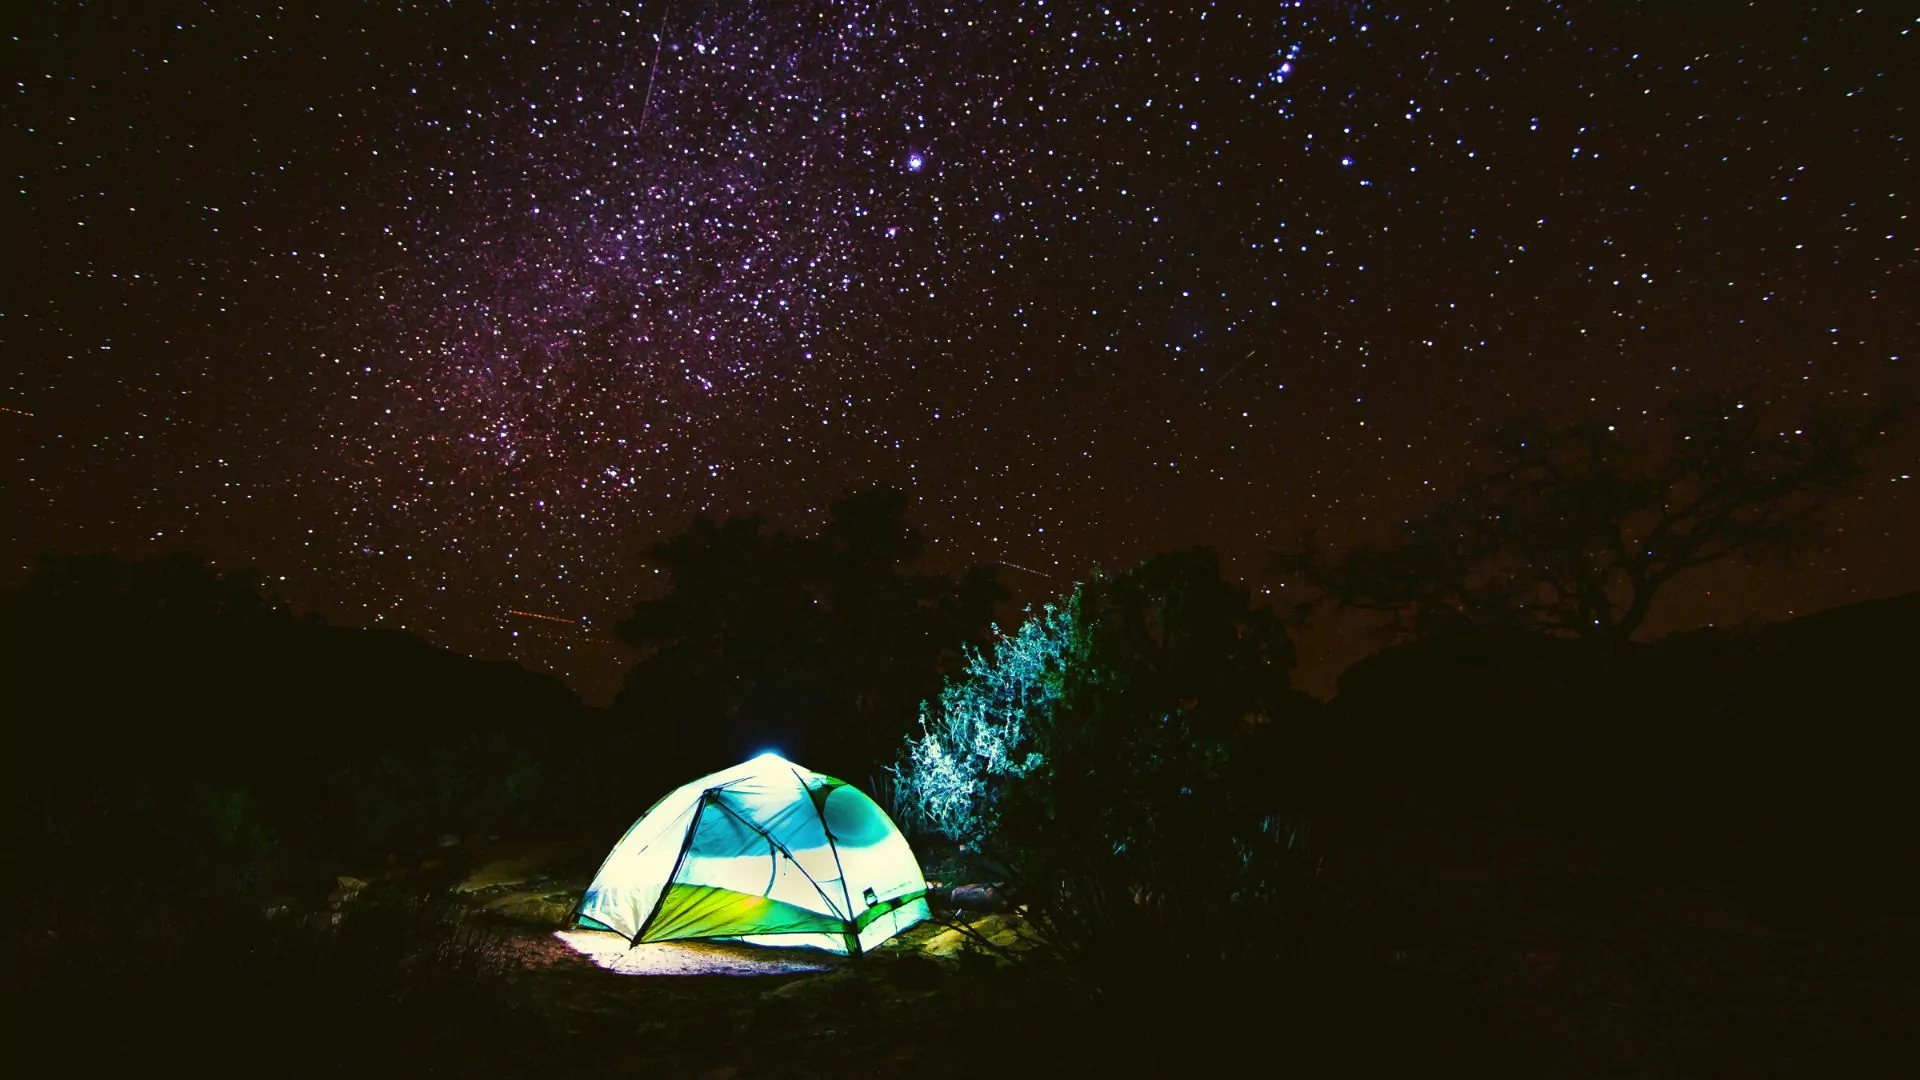 Camping Grand Canyon dark night sky with stars